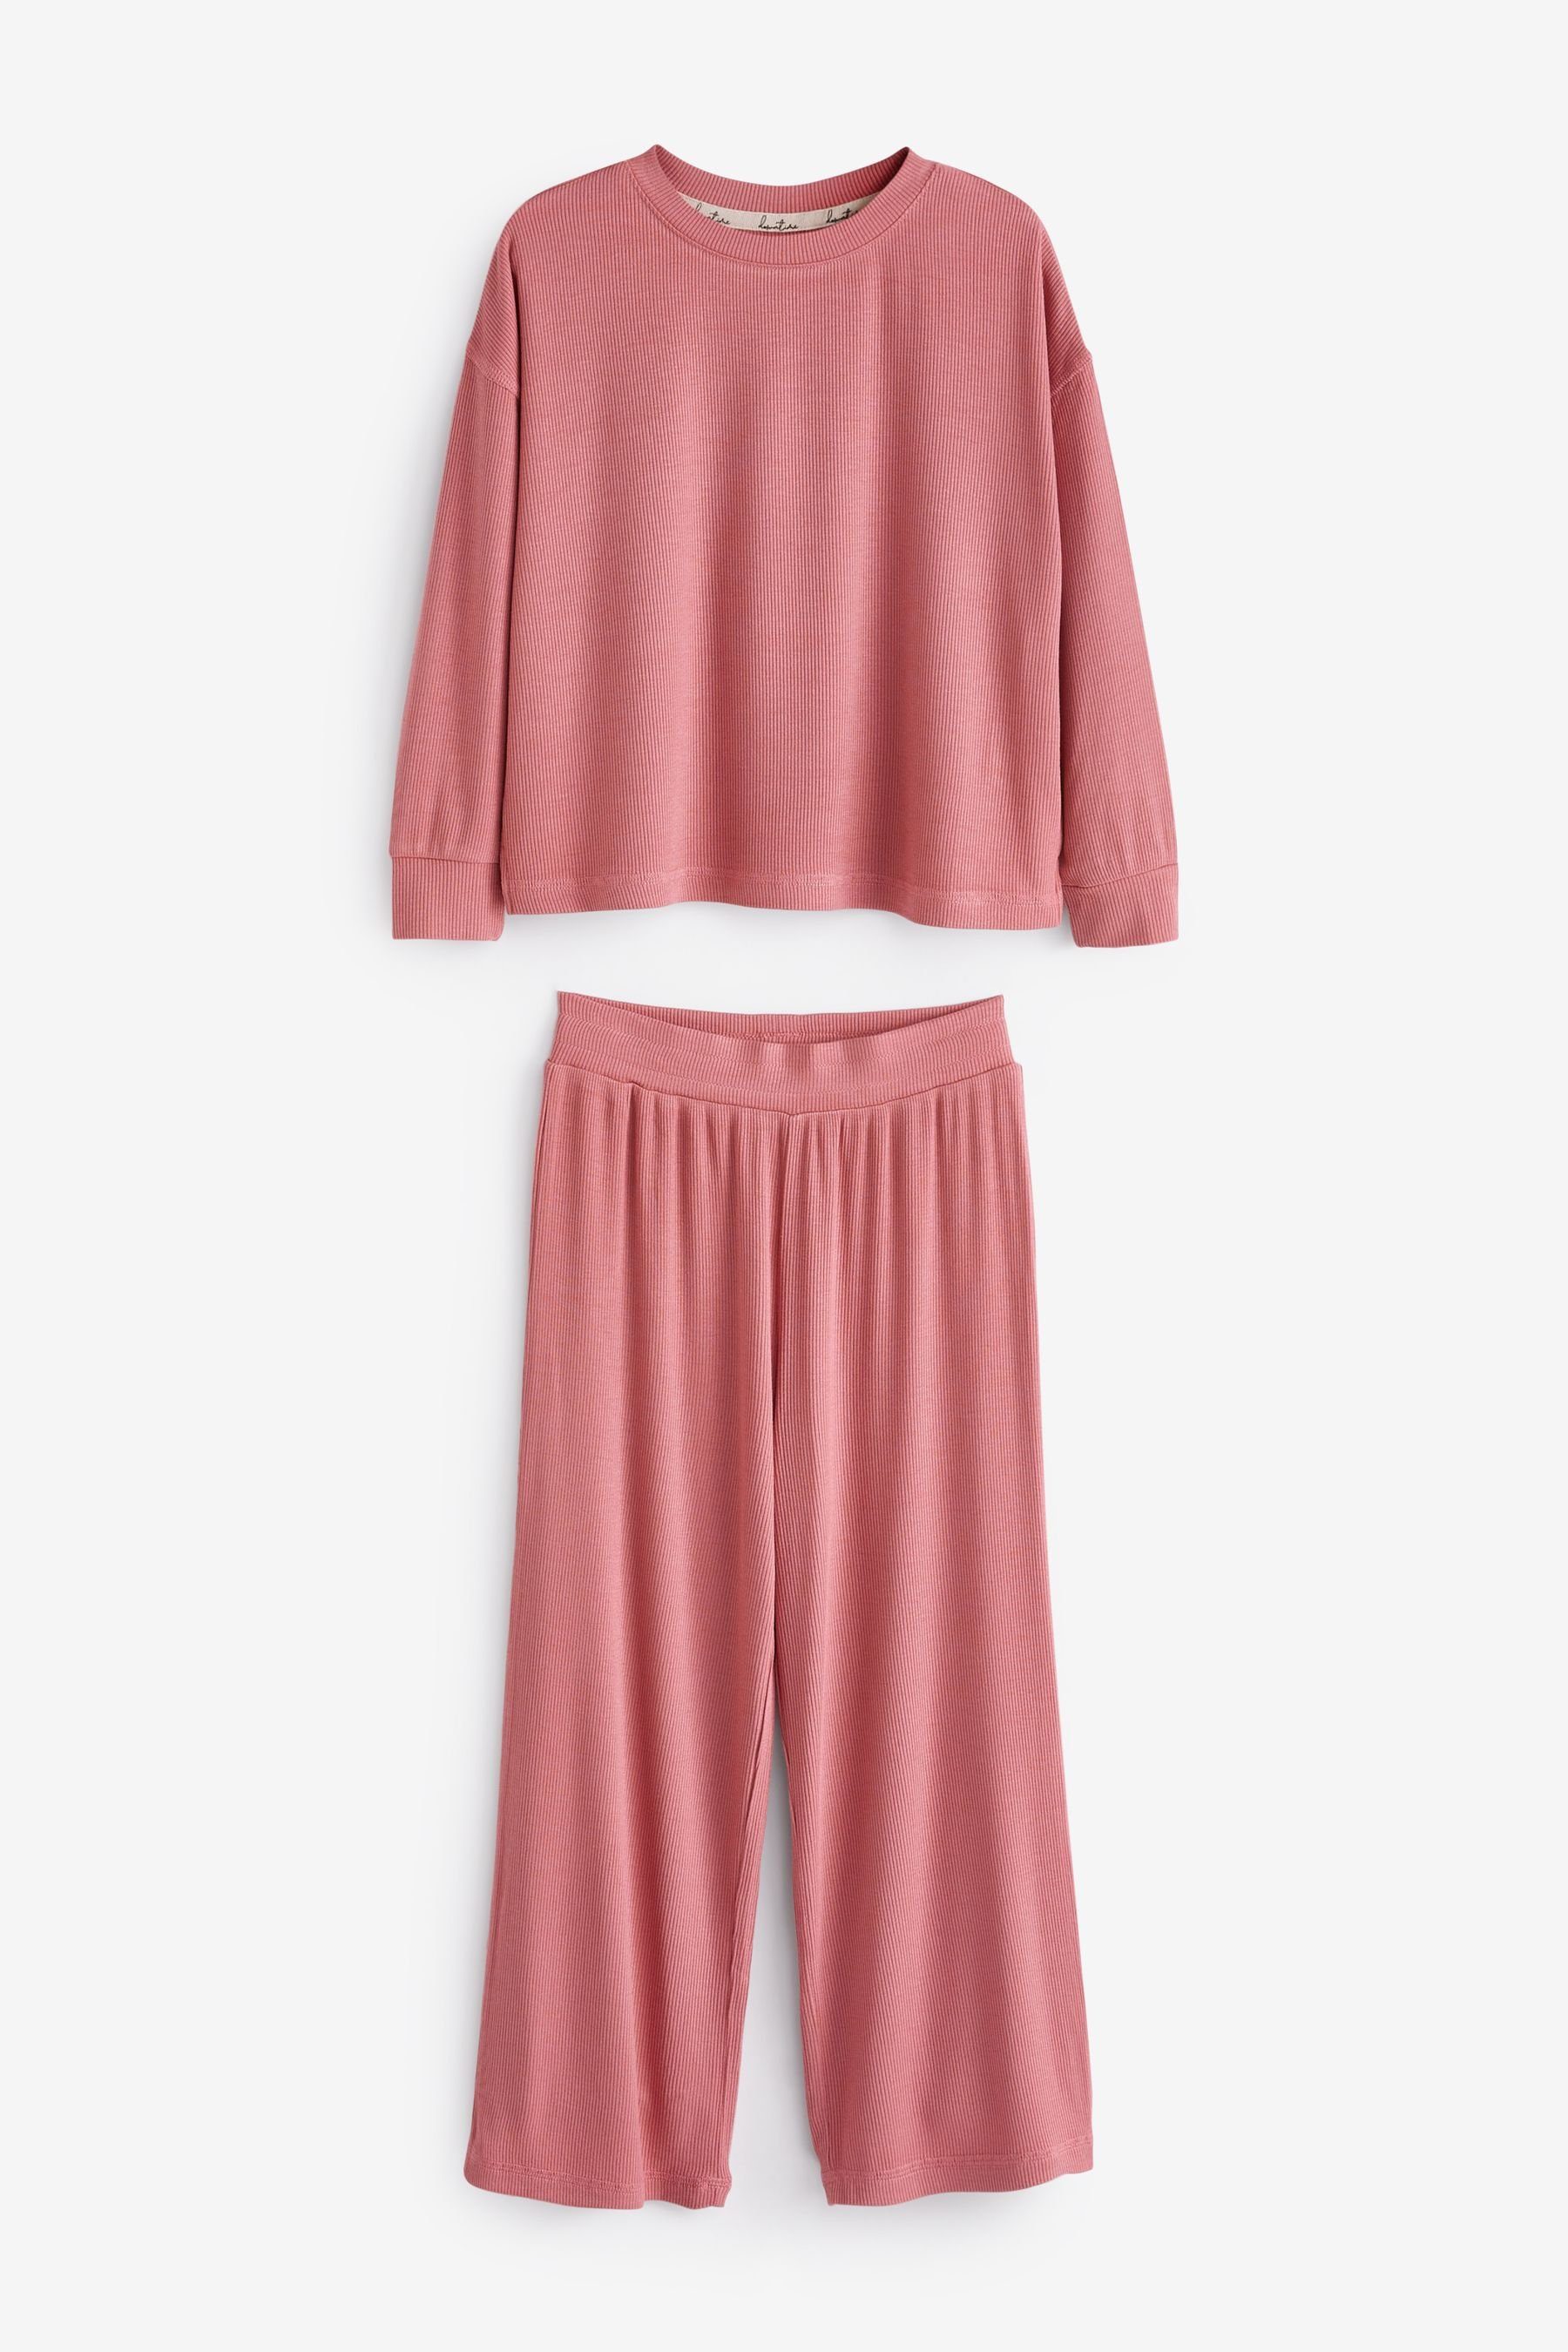 tlg) (2 Bein Gerippter Next weitem Pyjama Pink mit Pyjama